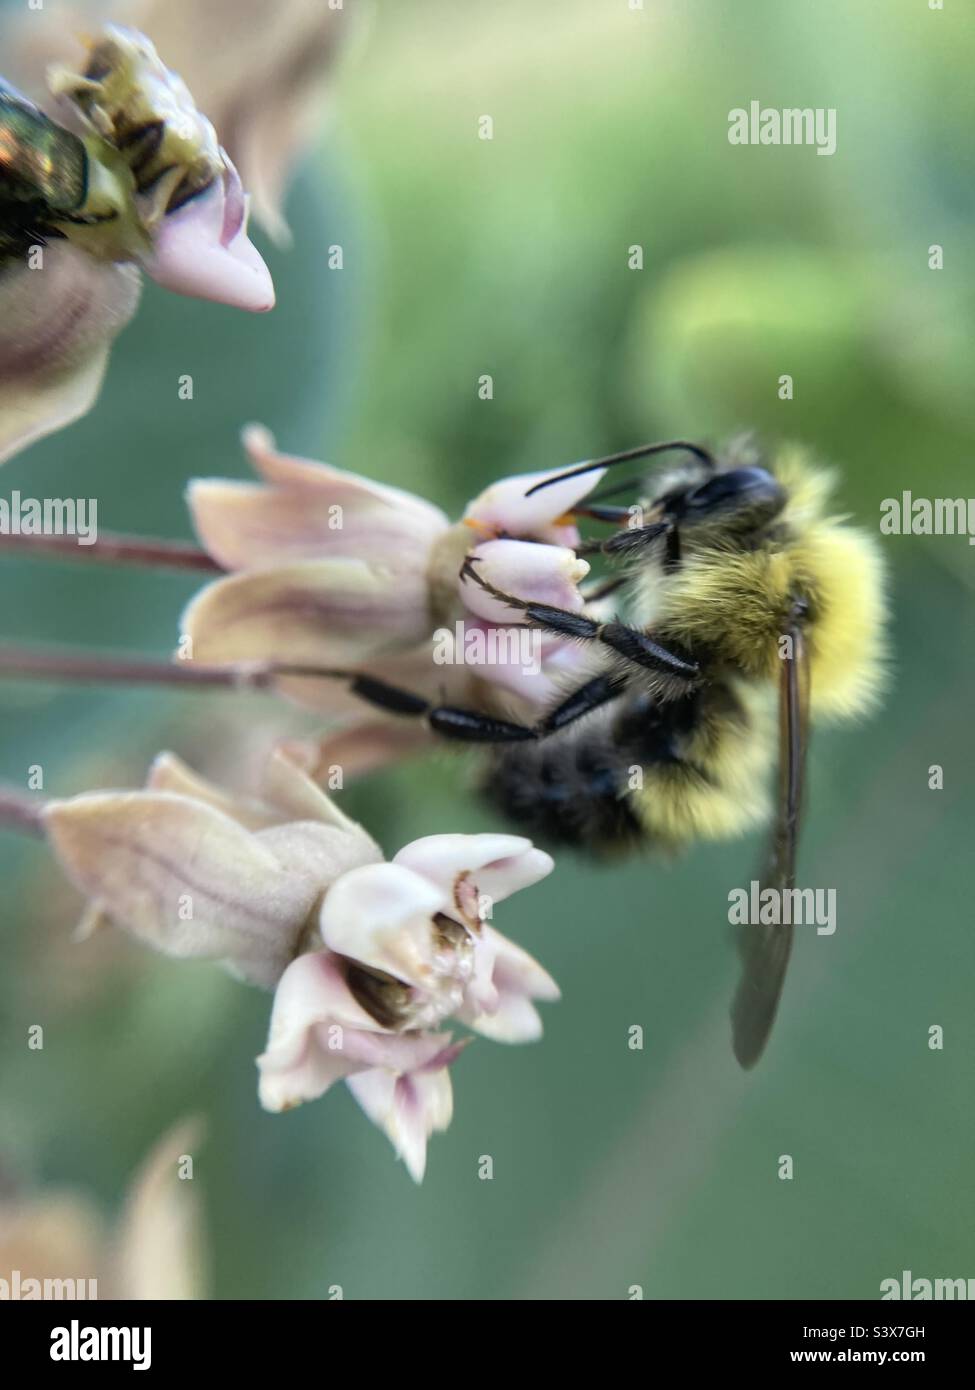 Bumblebee on flower Stock Photo